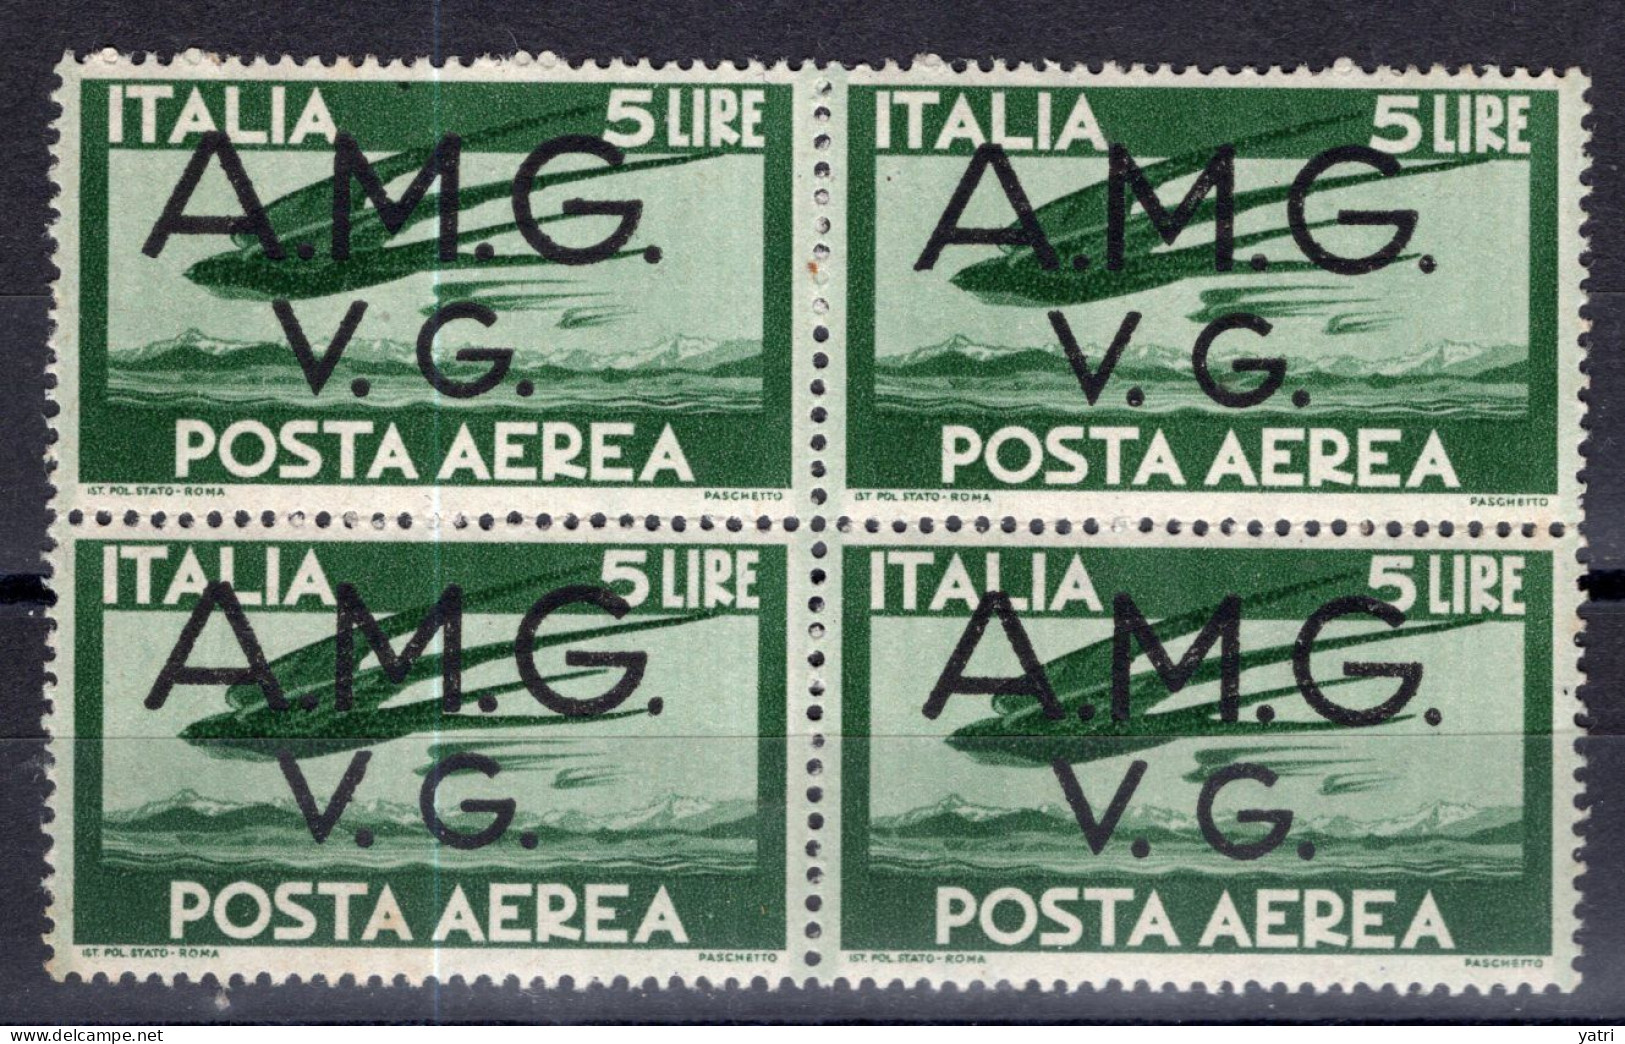 Venezia Giulia - Posta Aerea, 5 Lire Verde Sass. 4 ** - Mint/hinged